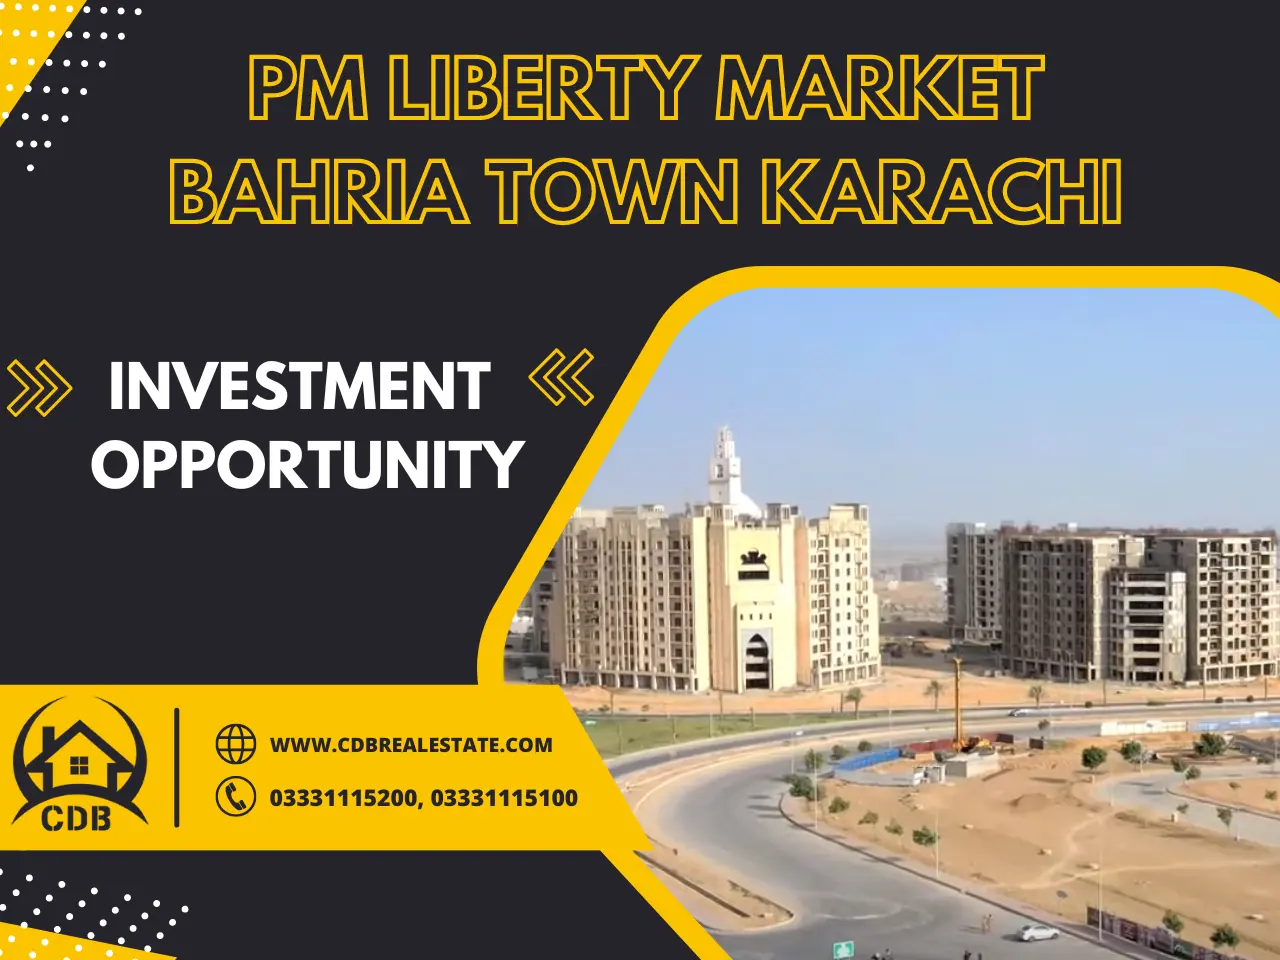 buildings near pm liberty market bahria town karachi